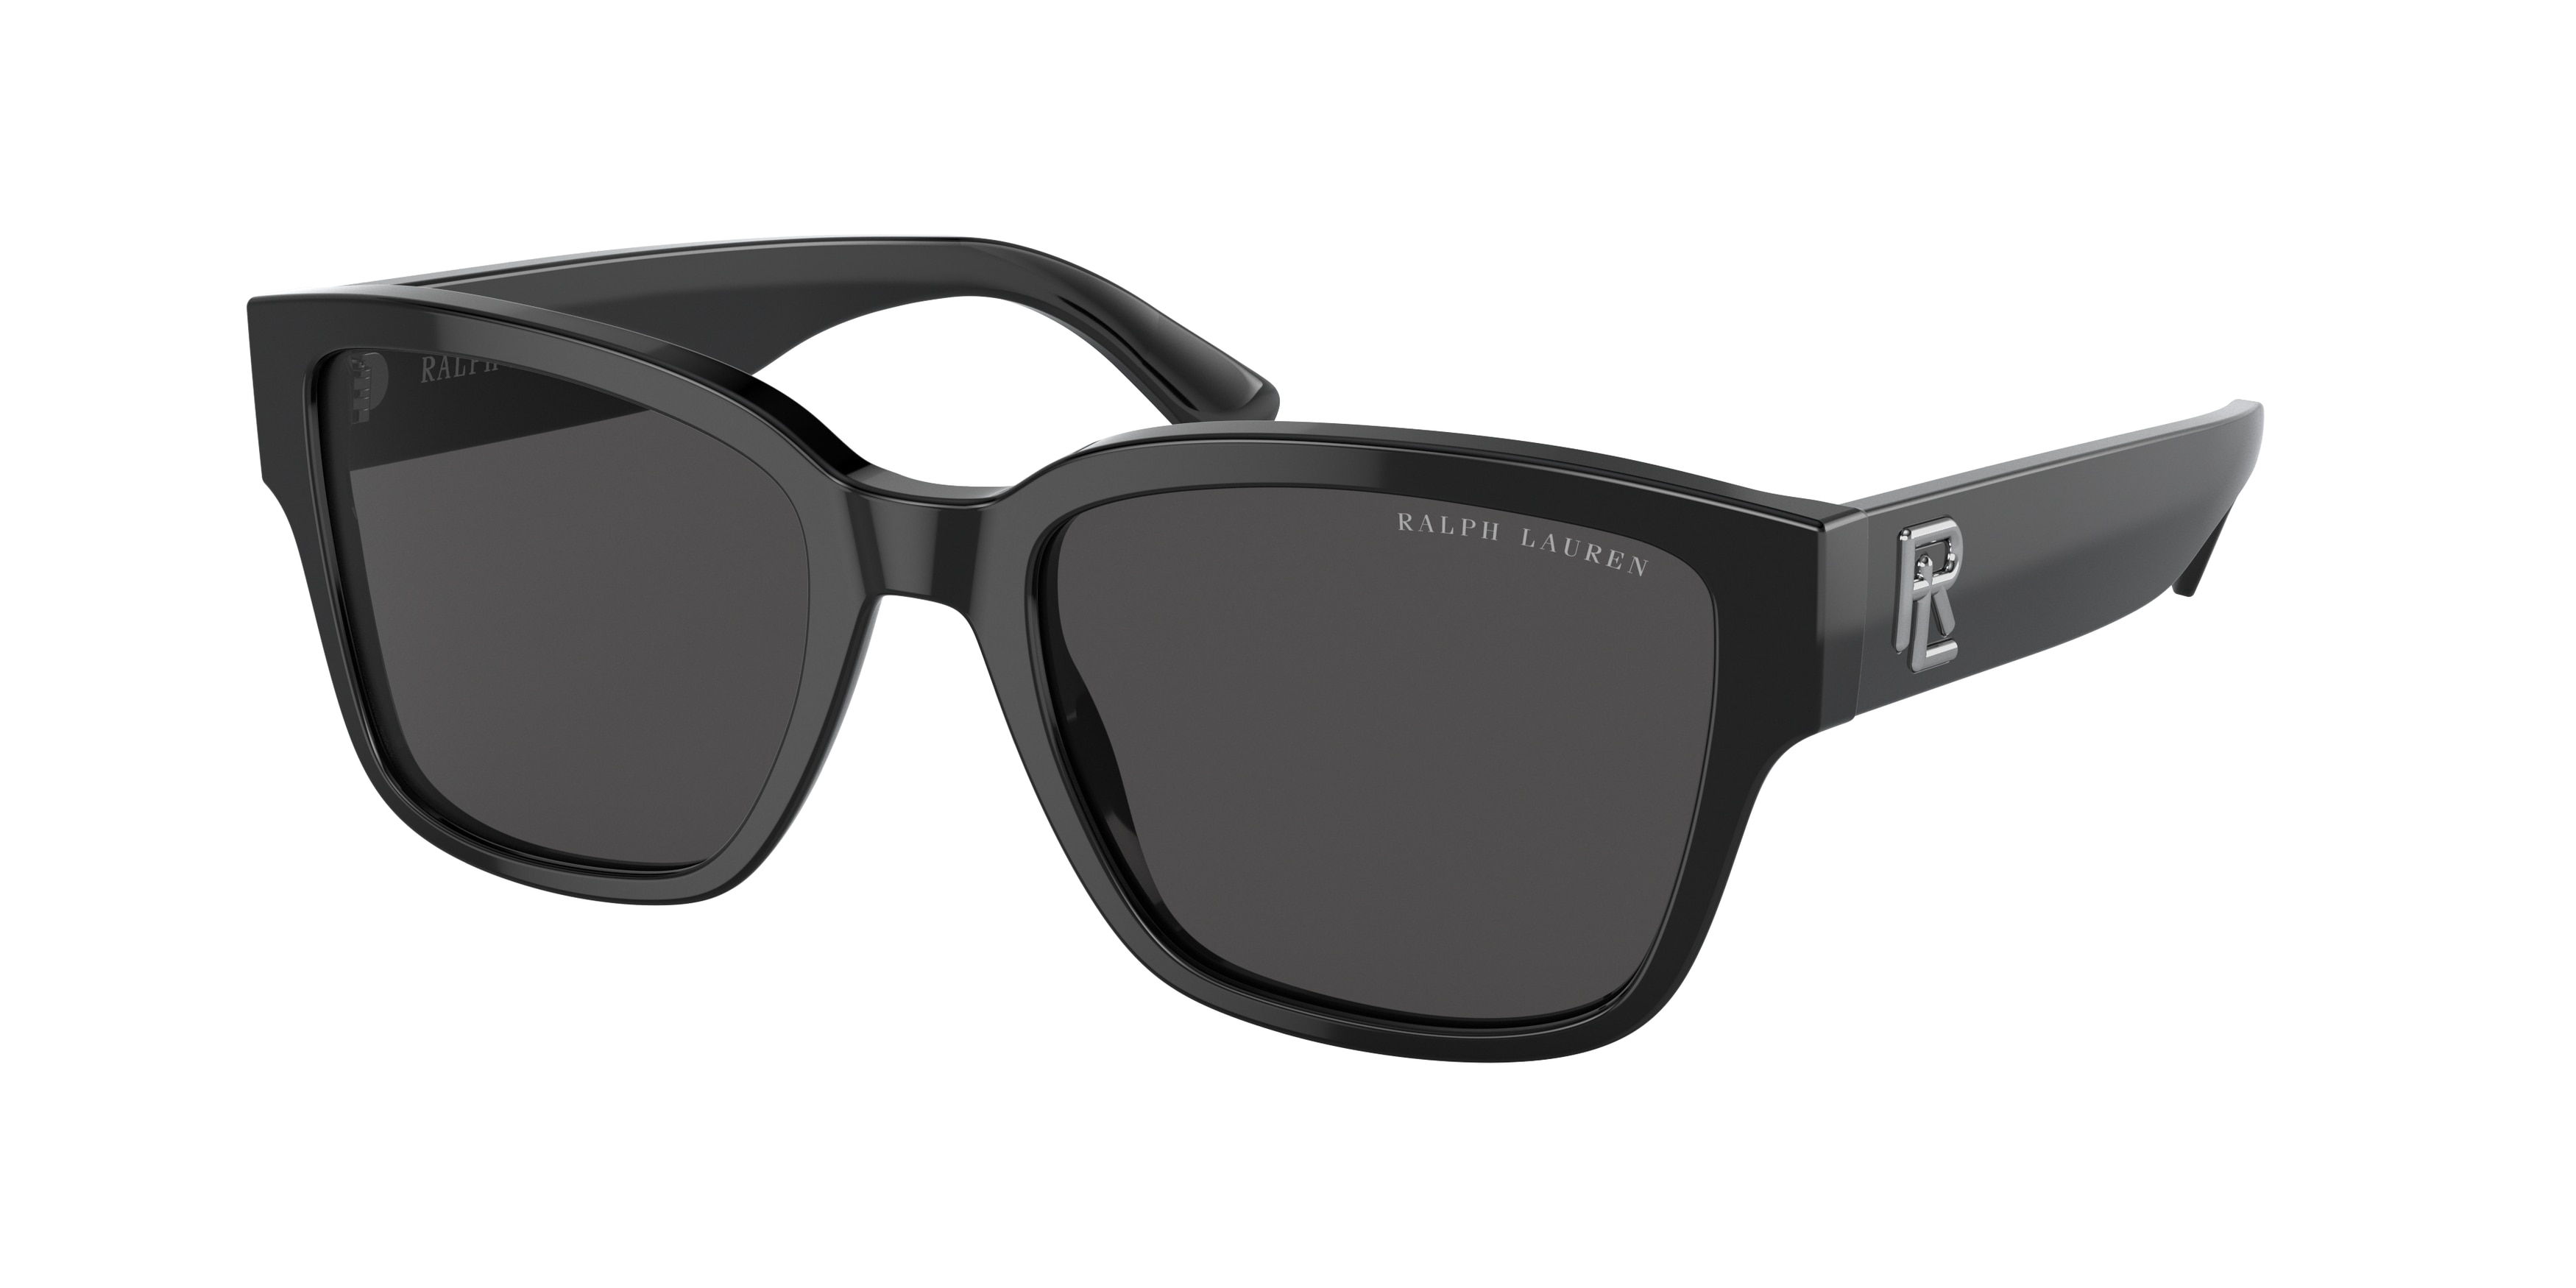 Ralph Lauren RL 8205 Sunglasses | Free Delivery | Ralph Lauren Sunglasses |  Designer Sunglasses